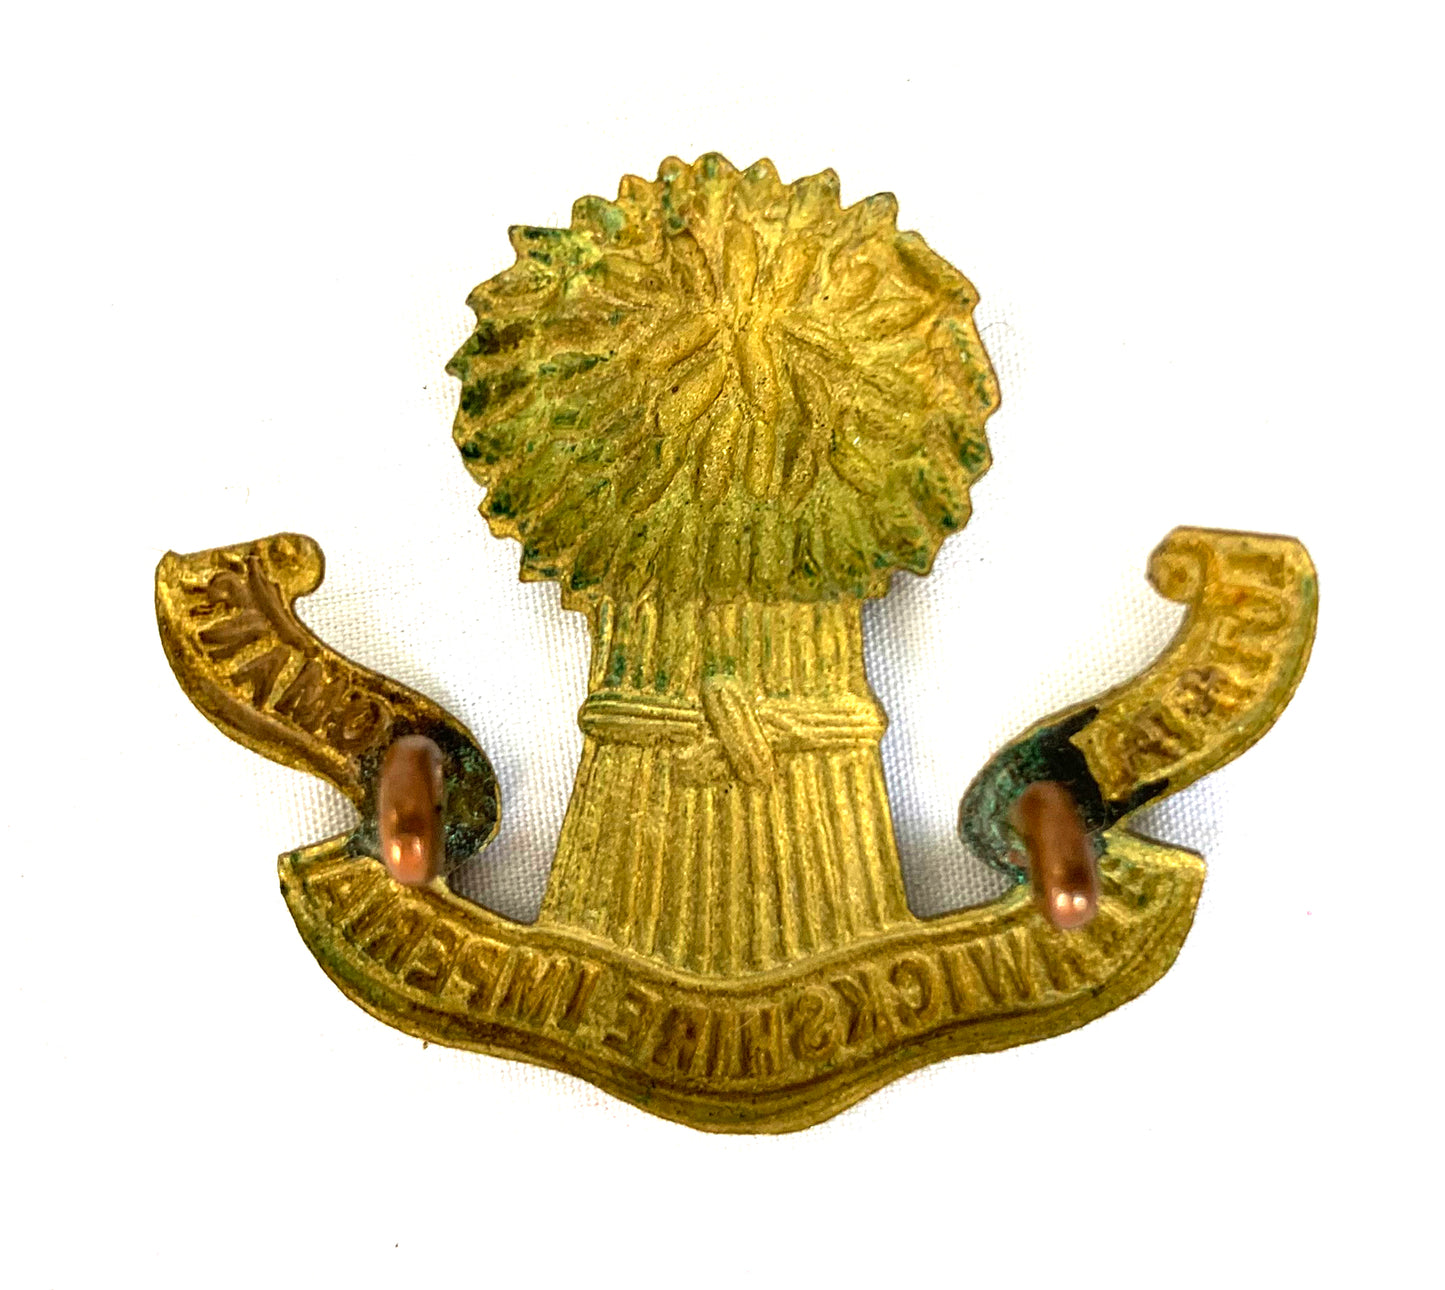 Lothians and Berwickshire Imperial Yeomanry Original Cap Badge